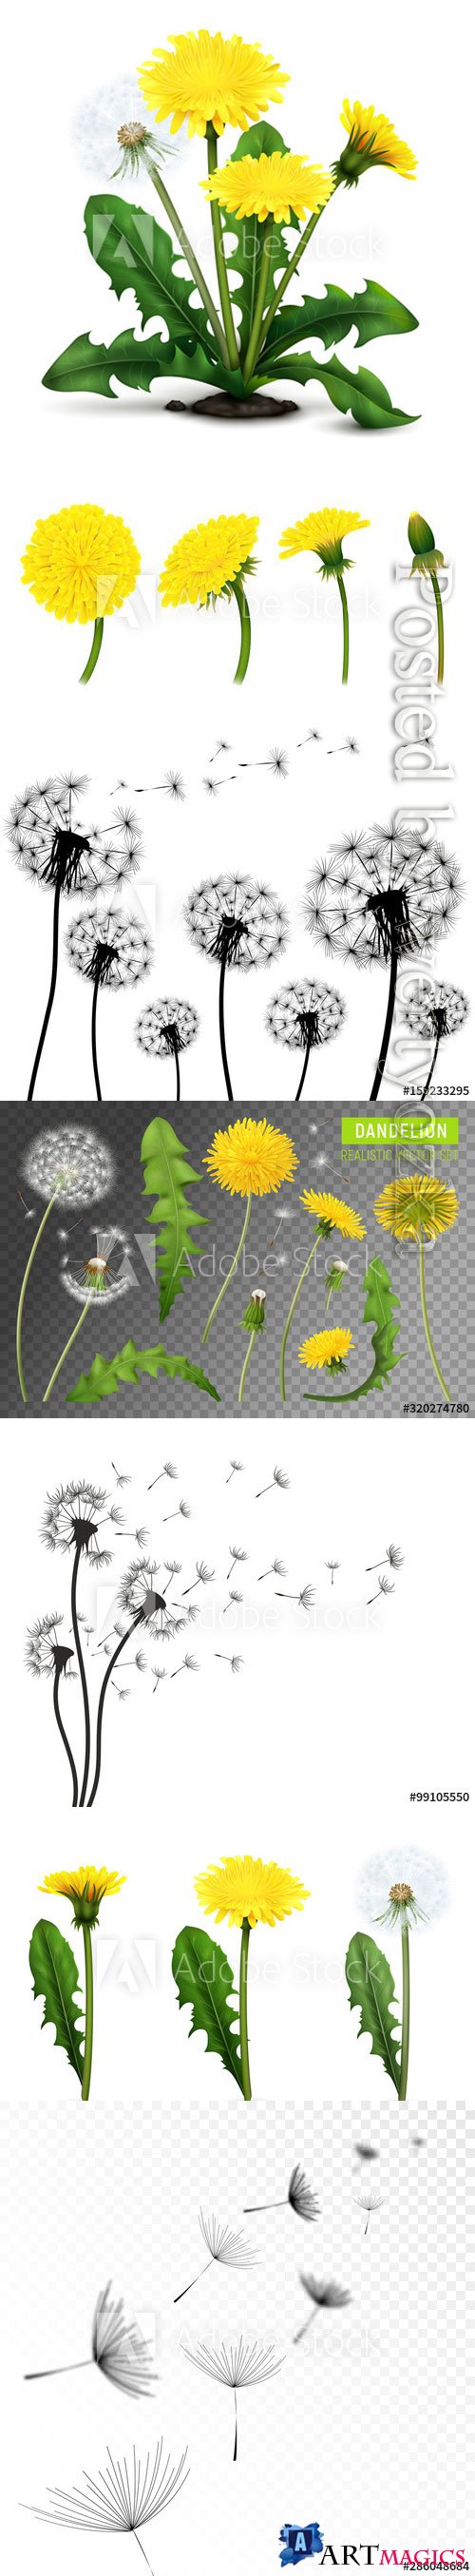 Dandelions vector illustrations